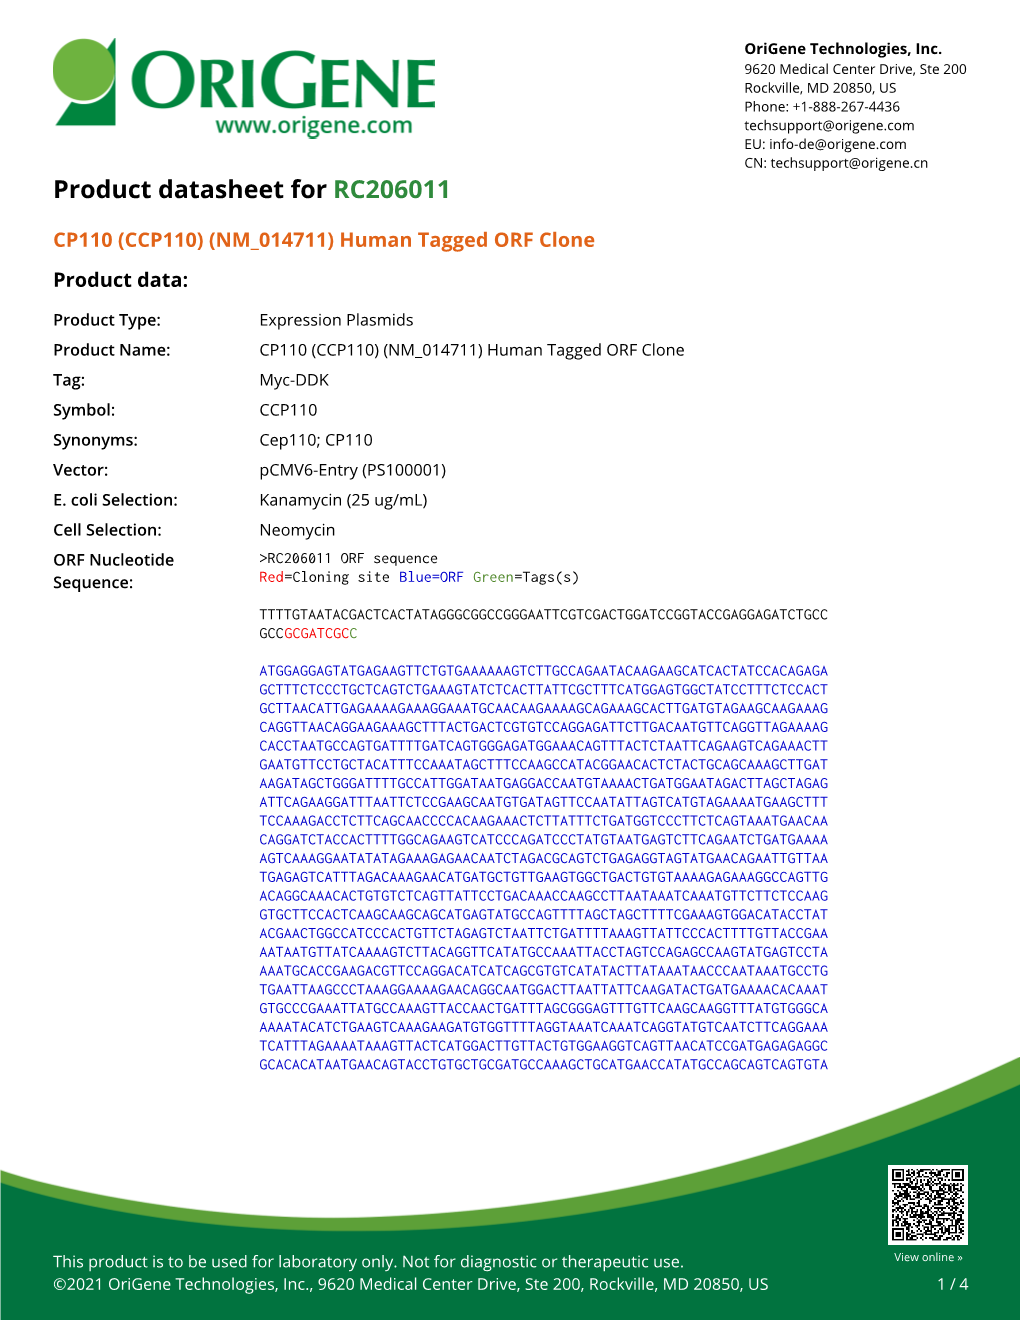 CP110 (CCP110) (NM 014711) Human Tagged ORF Clone – RC206011 | Origene